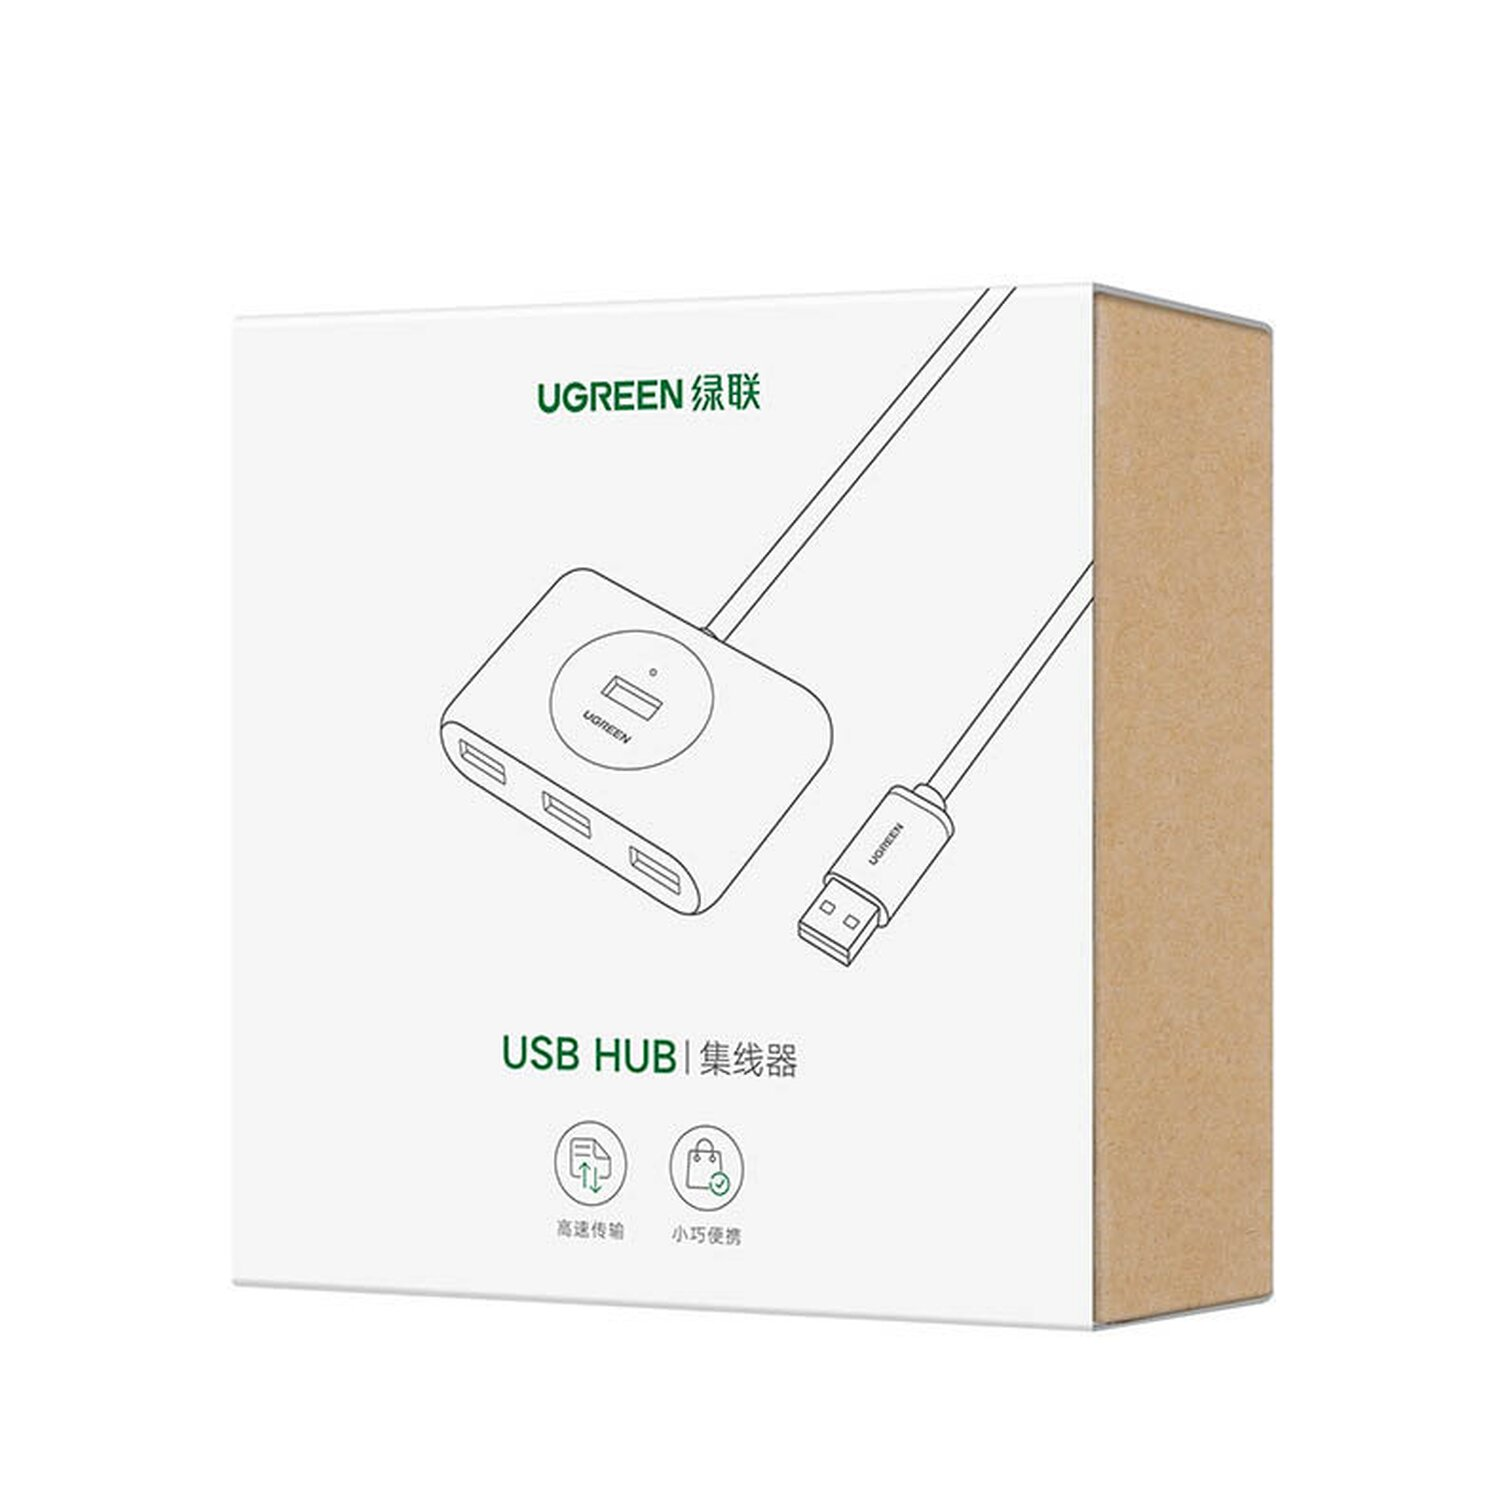 UGREEN USB 3.0 HUB USB Hub